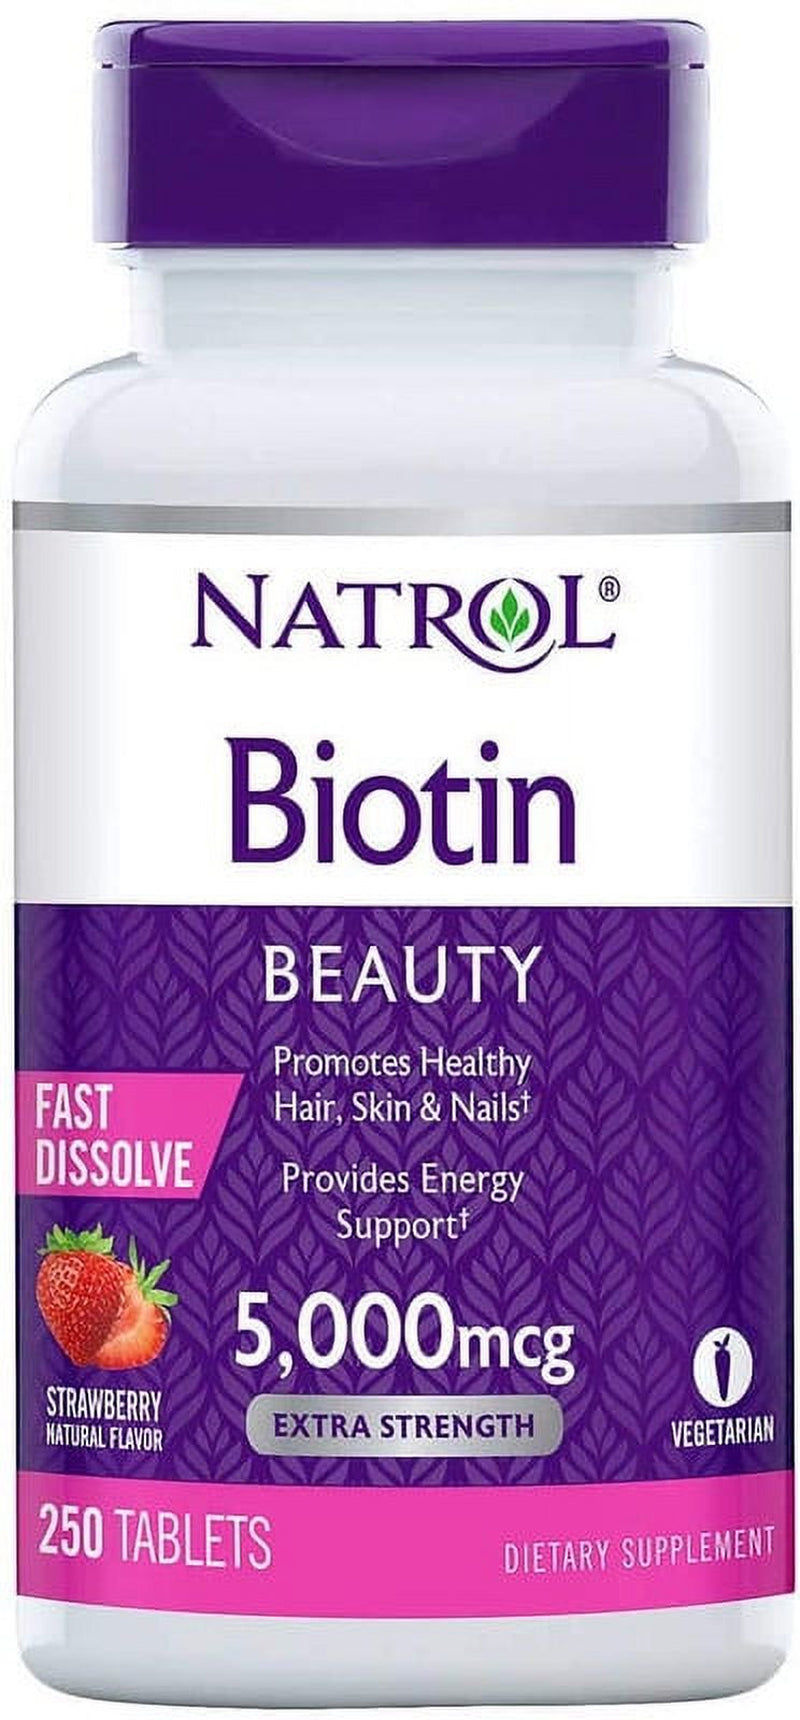 Natrol Biotin BEAUTY 5,000 Mcg Strawberry Flavor 250 Fast Dissolve Tabs - 2 Pack